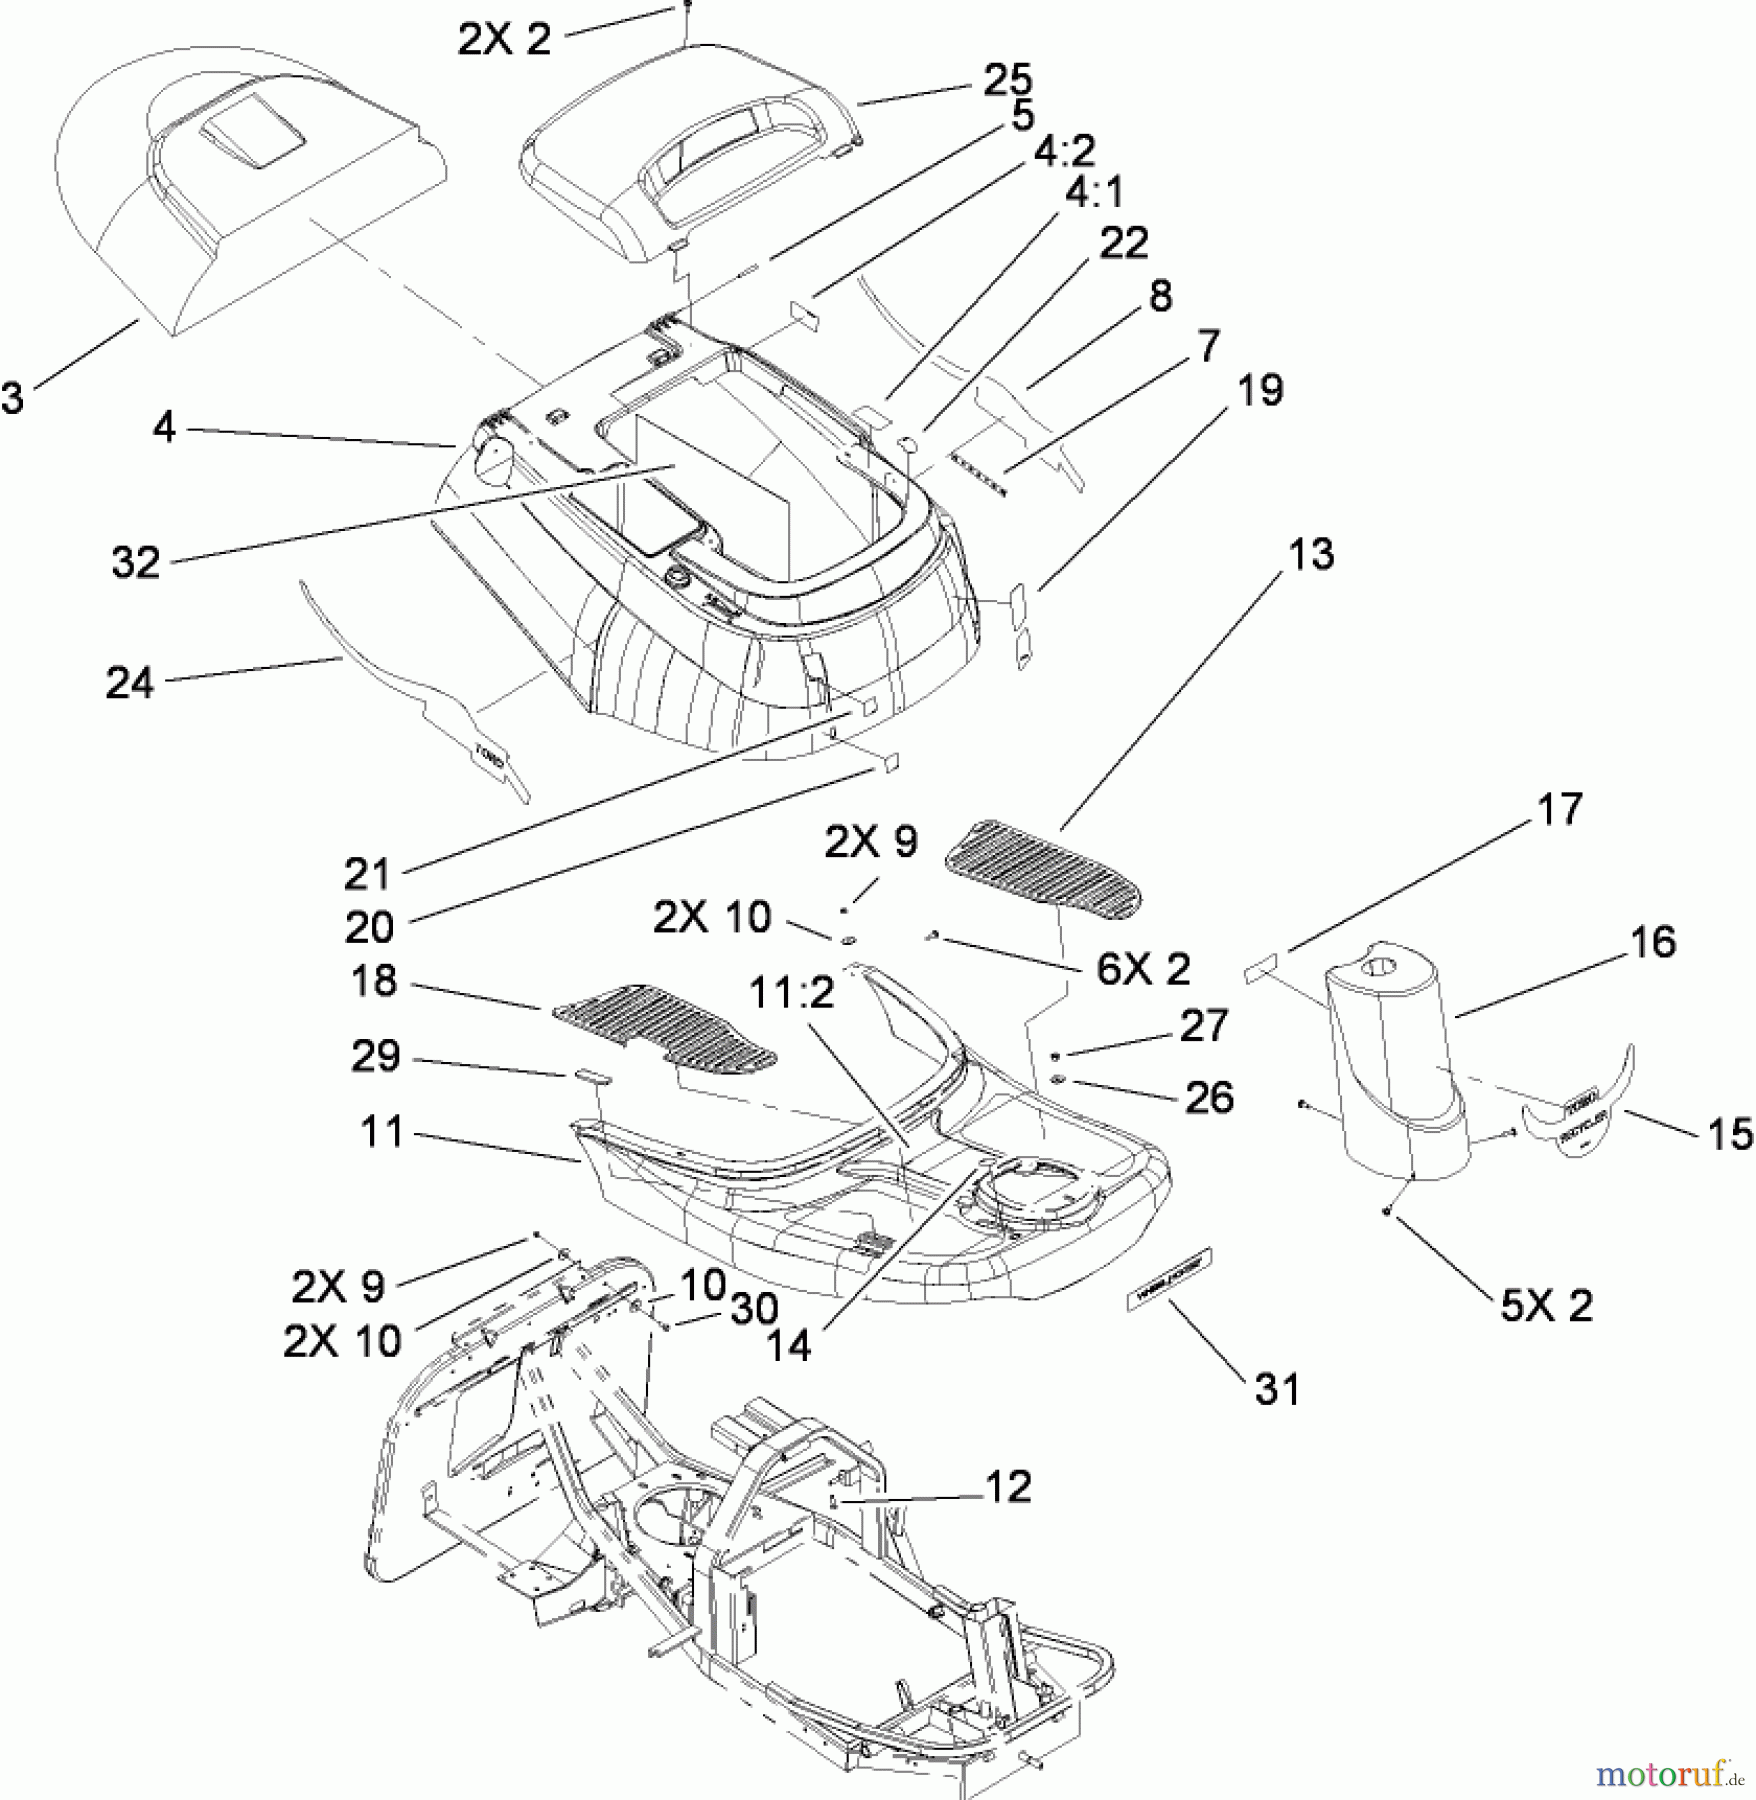  Toro Neu Mowers, Rear-Engine Rider 70185 (G132) - Toro G132 Rear-Engine Riding Mower, 2009 (280899565-290999999) BODY AND DECAL ASSEMBLY